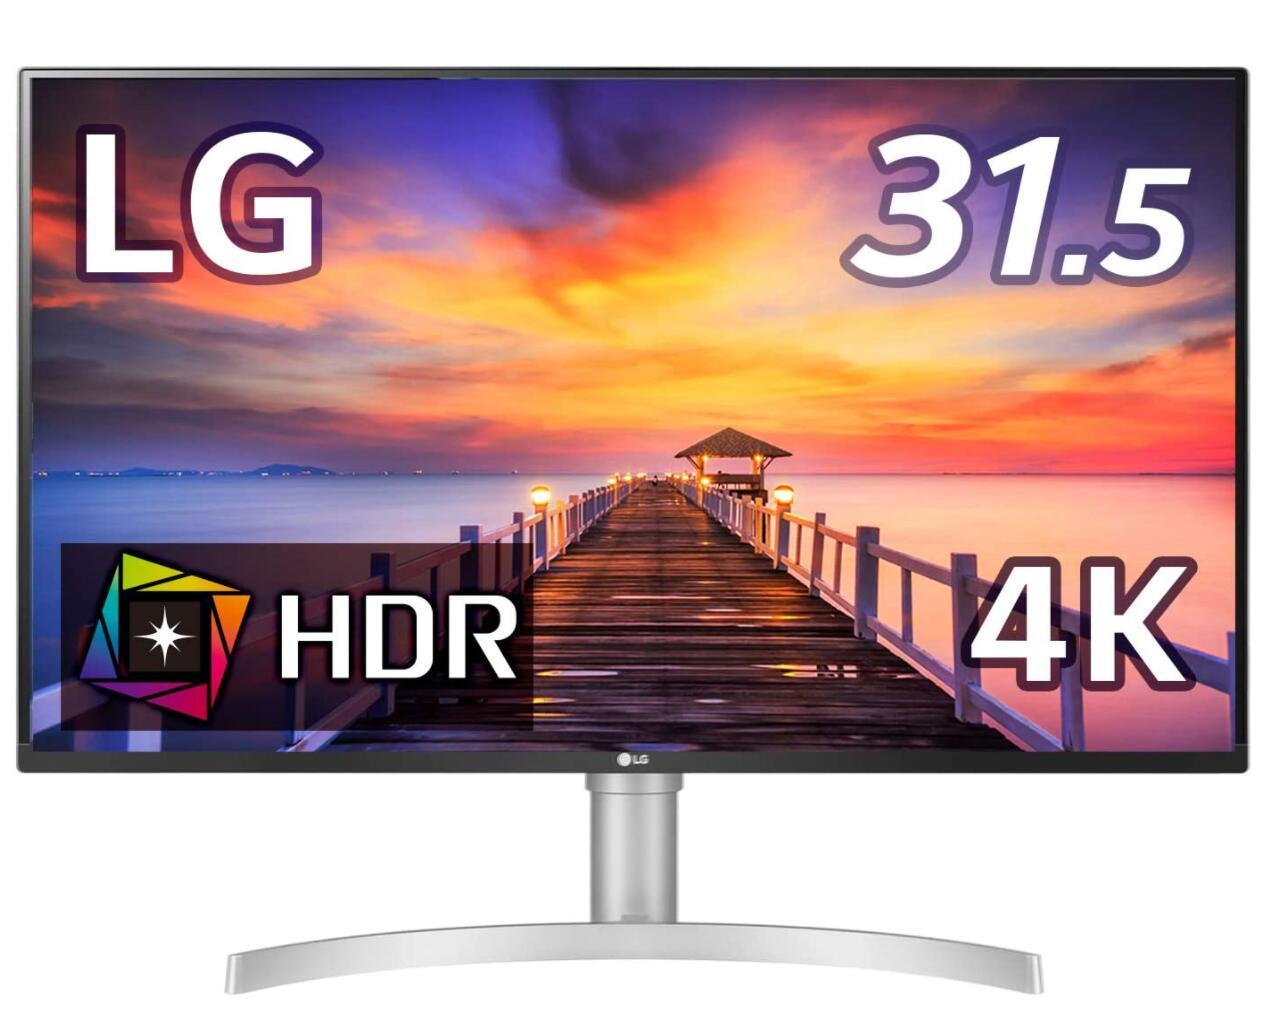 LG フレームレス モニター ディスプレイ 32UN500-W 31.5インチ 4K HDR VA非光沢 HDMI×2 DP FreeSync対応  スピーカー搭載 フリッカーセーフ ブルーライト低減 【84%OFF!】